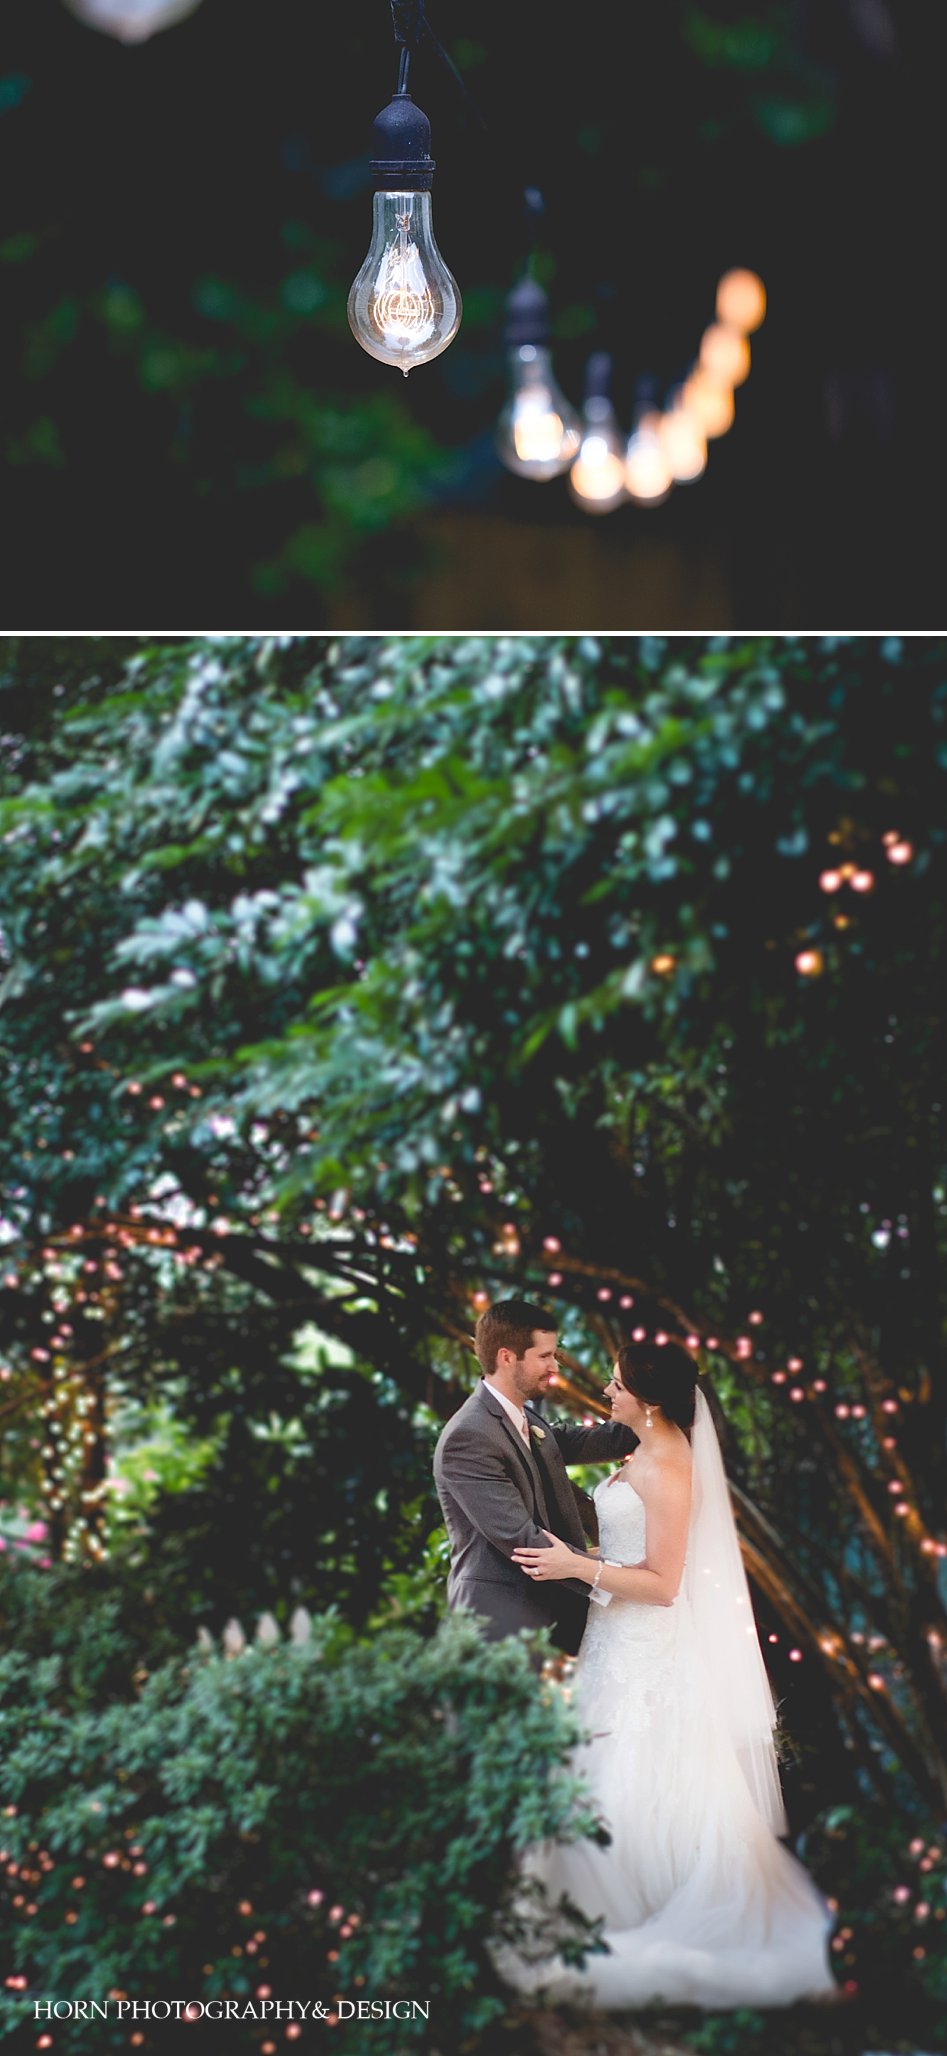 Eddison bulbs, vintage lights, string lights, posing couple, atlanta wedding photography